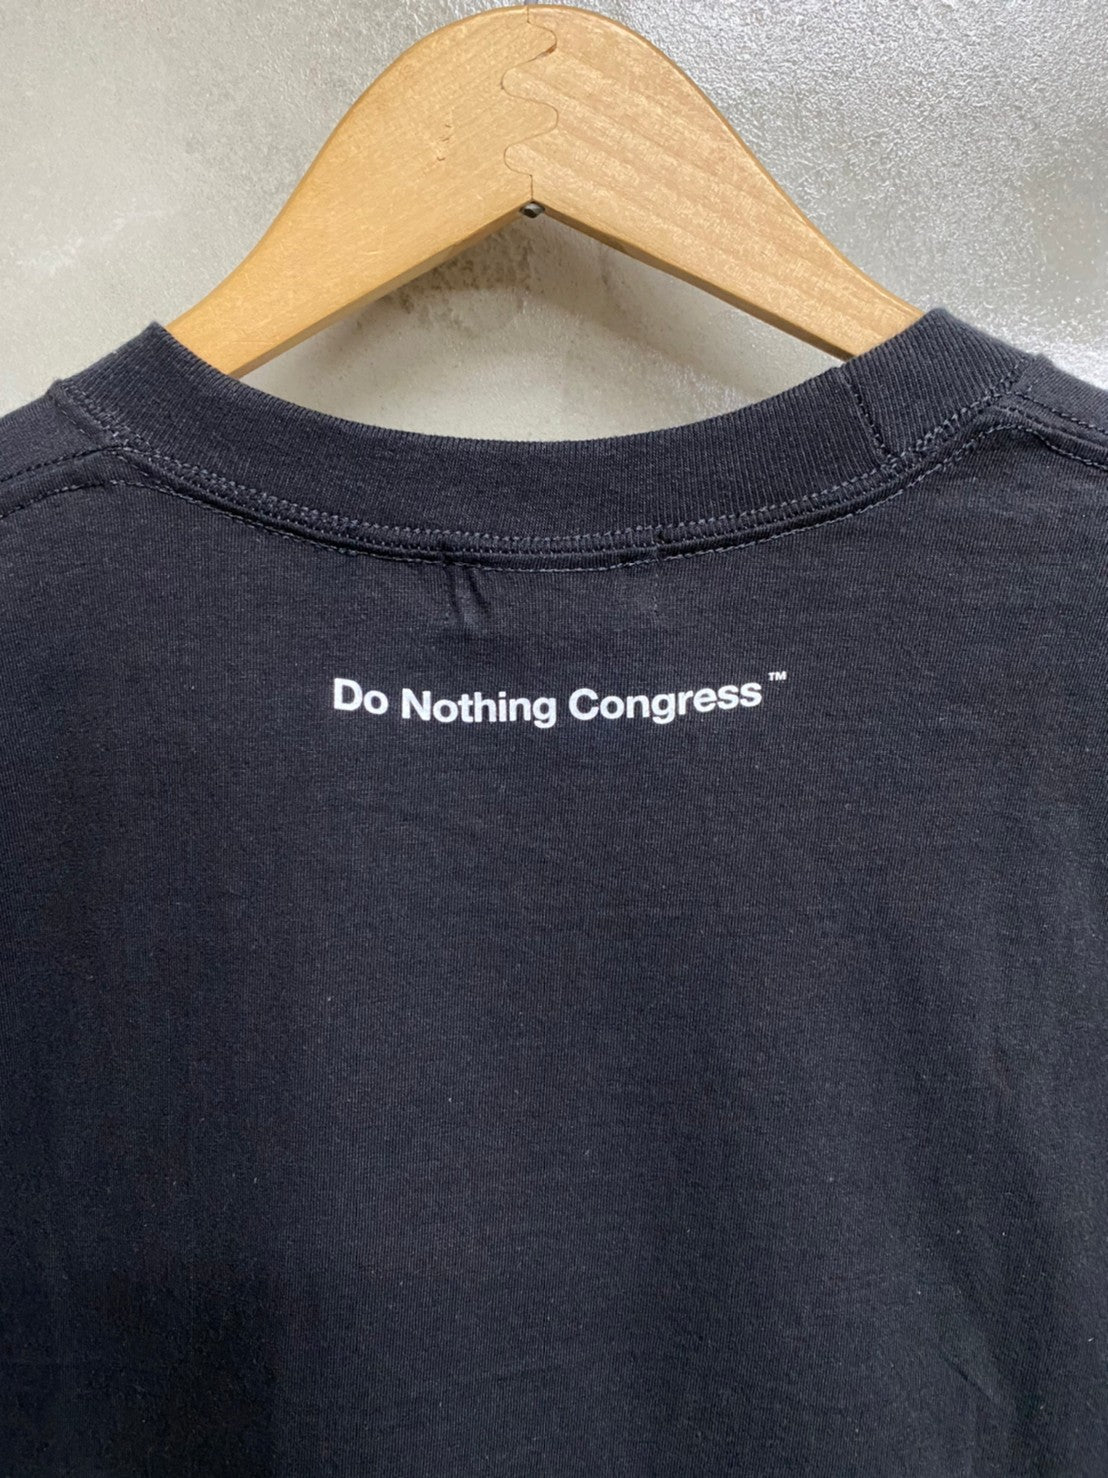 [ FINAL ONE ! ] Do Nothing Congress "NOTHING MATTERS " T-SHIRTS / Do Nothing Congress